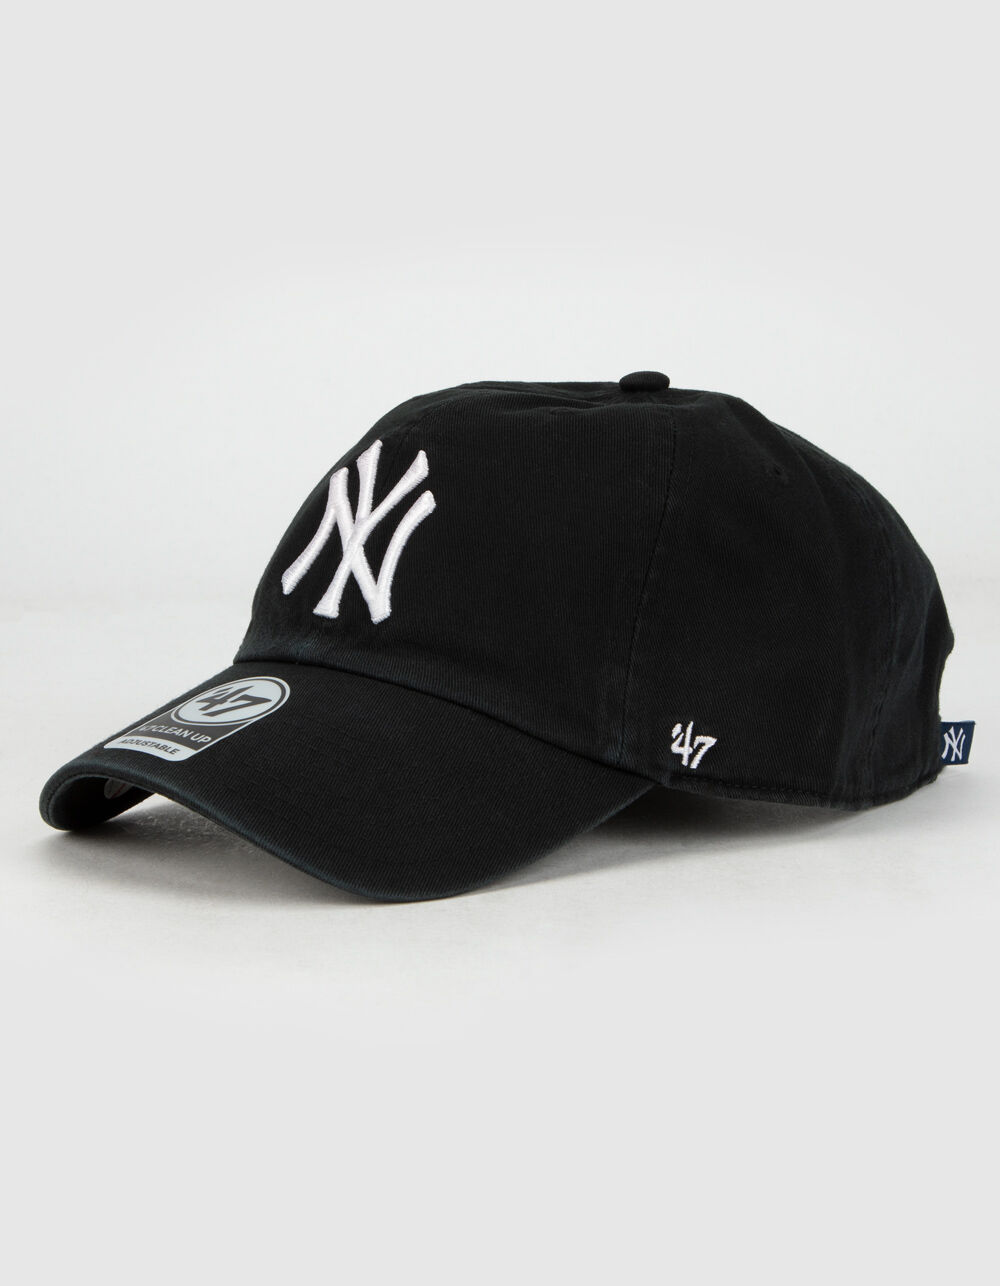  MLB New York Yankees Women's '47 Brand Clean Up Cap